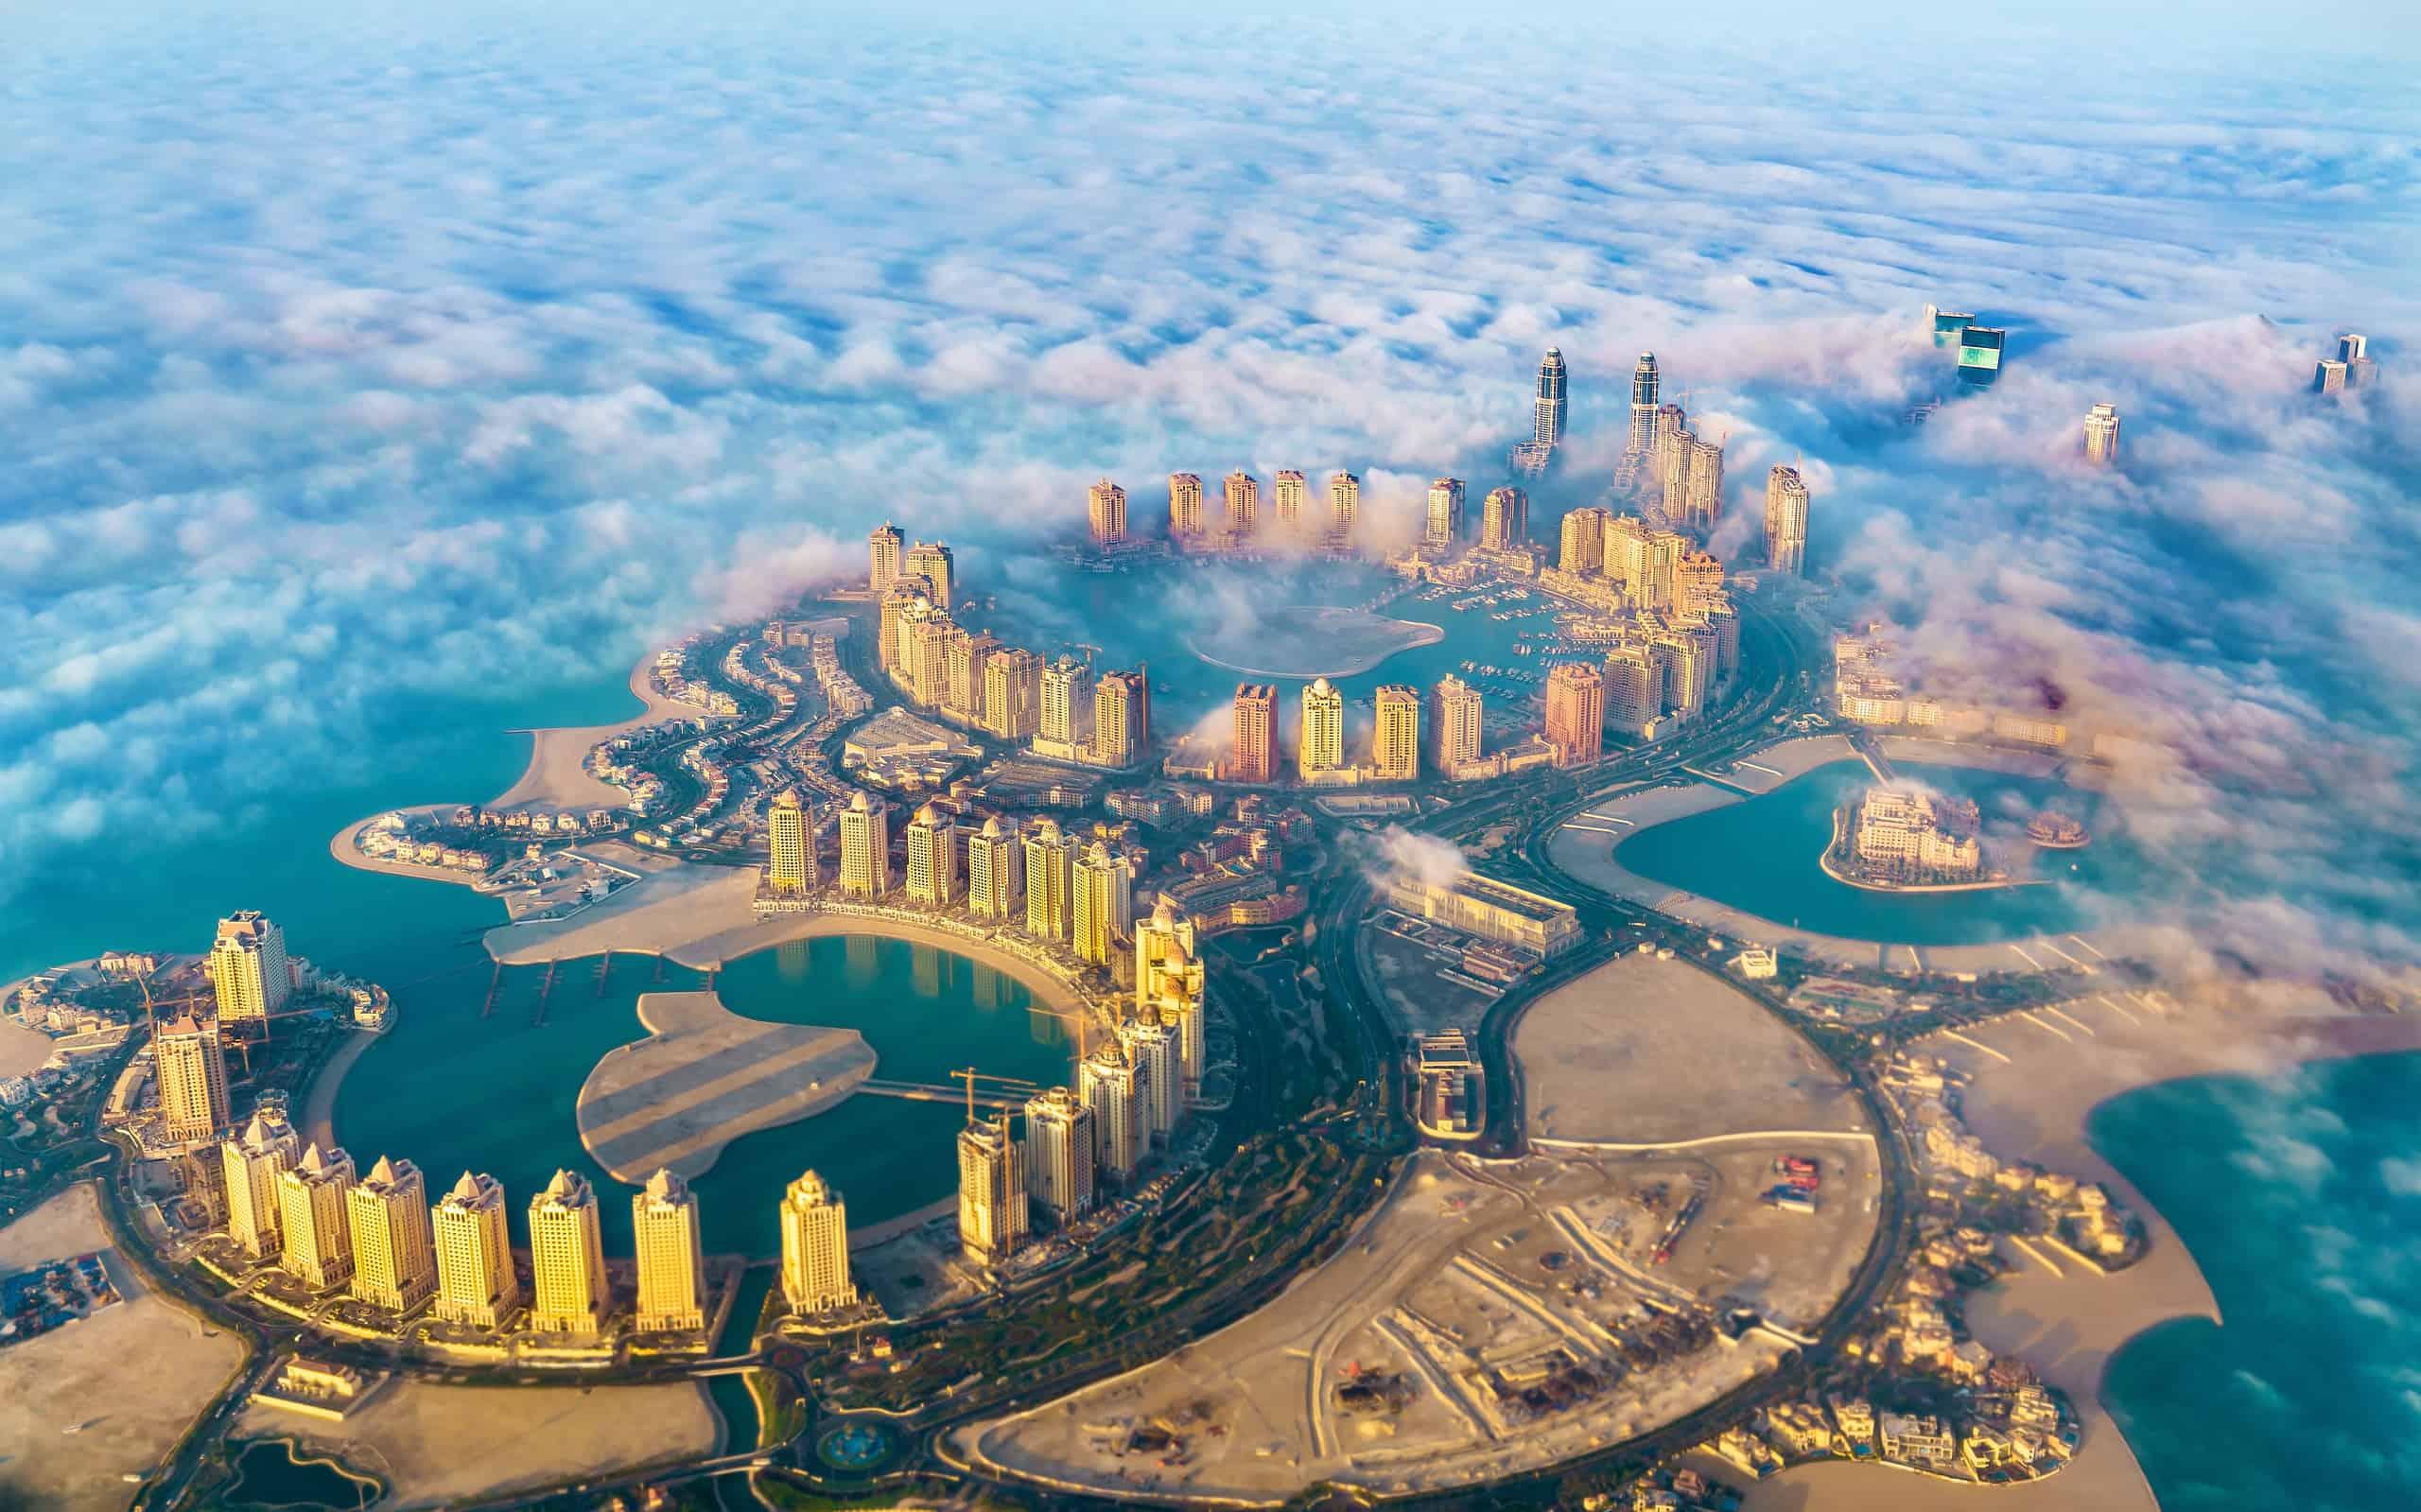 Aerial view of the Pearl-Qatar island in Doha through the morning fog - Qatar, the Persian Gulf